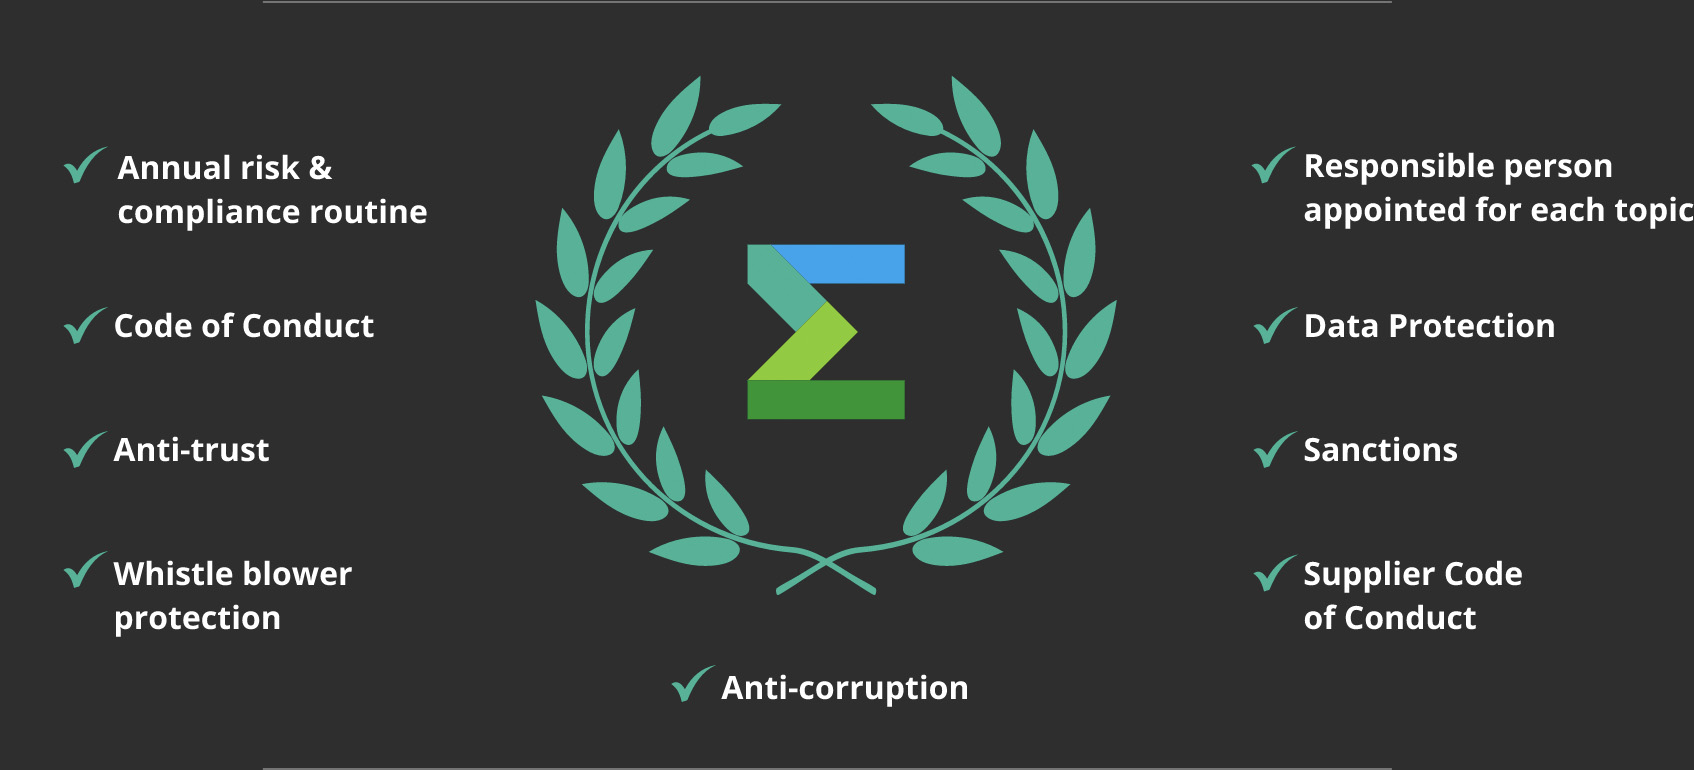 Anti-corruption